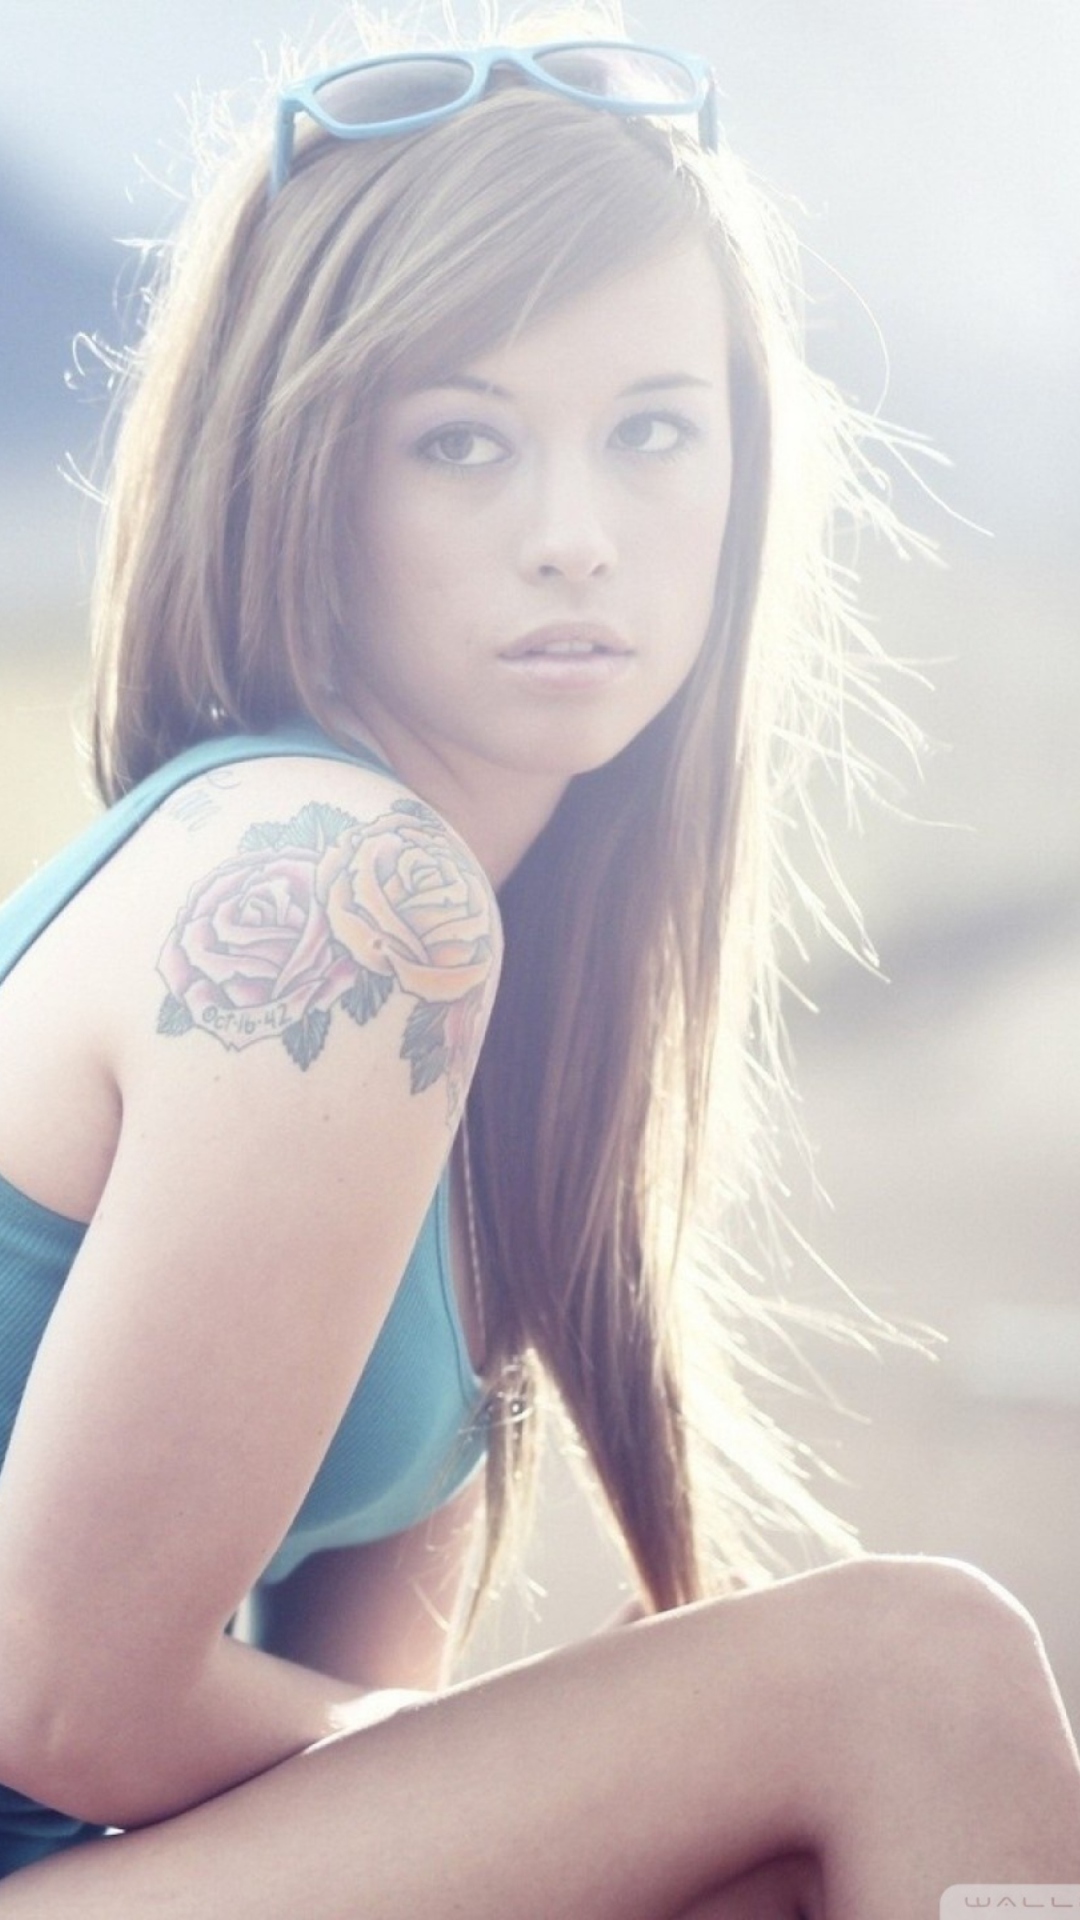 Sfondi Beautiful Girl With Long Blonde Hair And Rose Tattoo 1080x1920